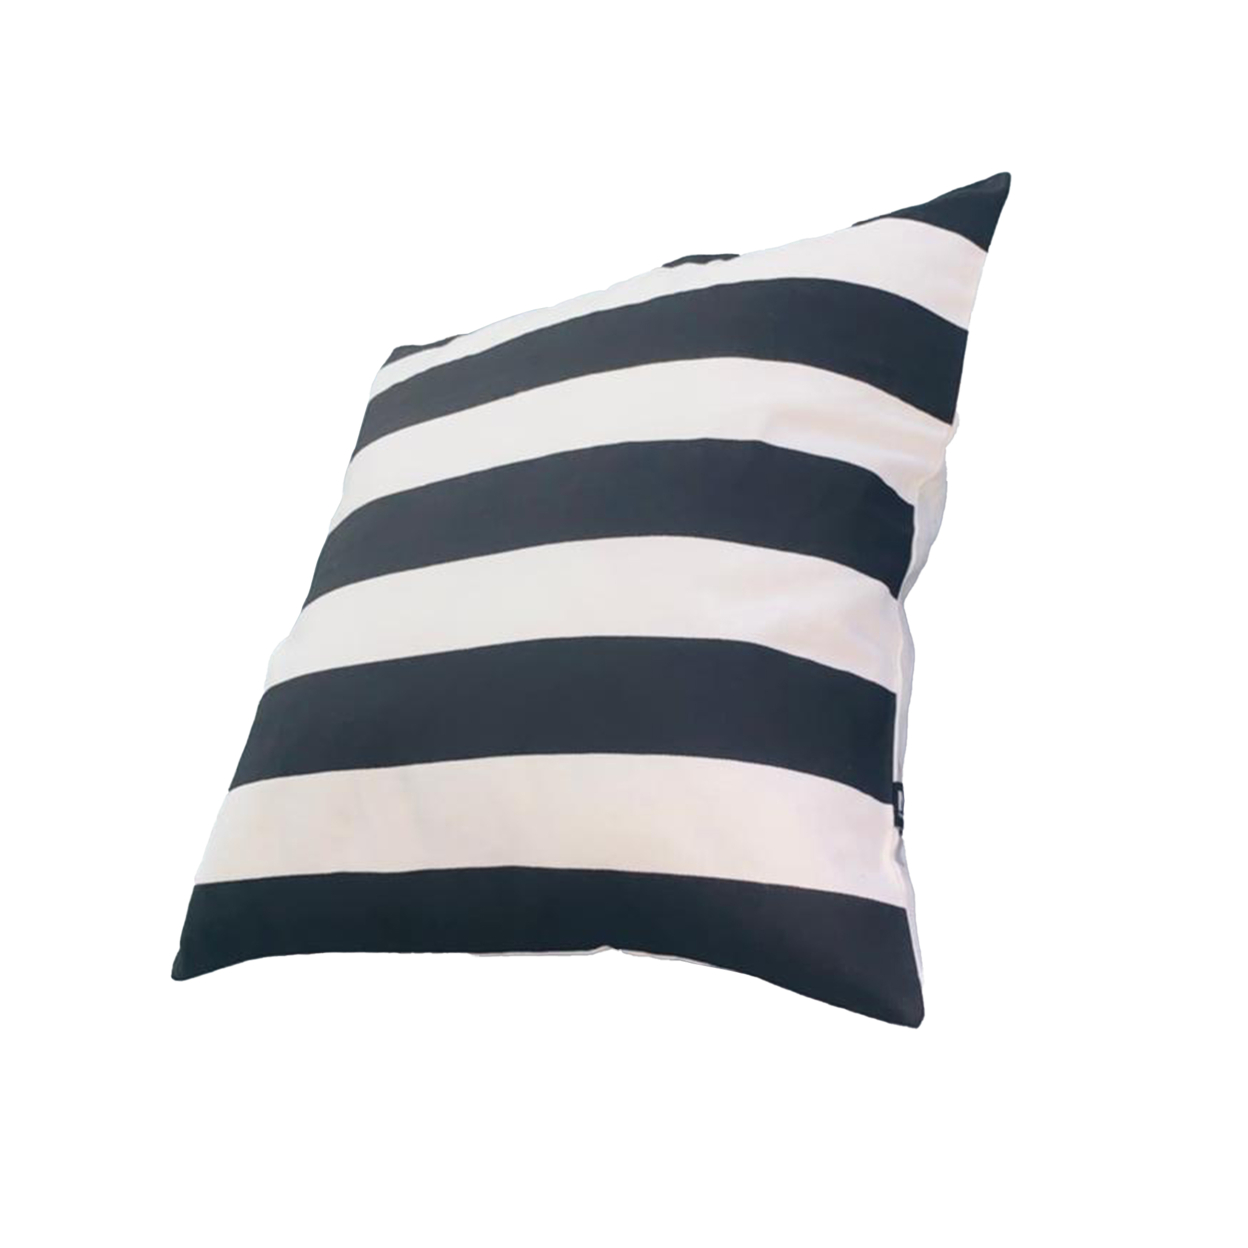 20 X 20 Square Cotton Accent Throw Pillows, Classic Block Stripes, Set Of 2, Black, White